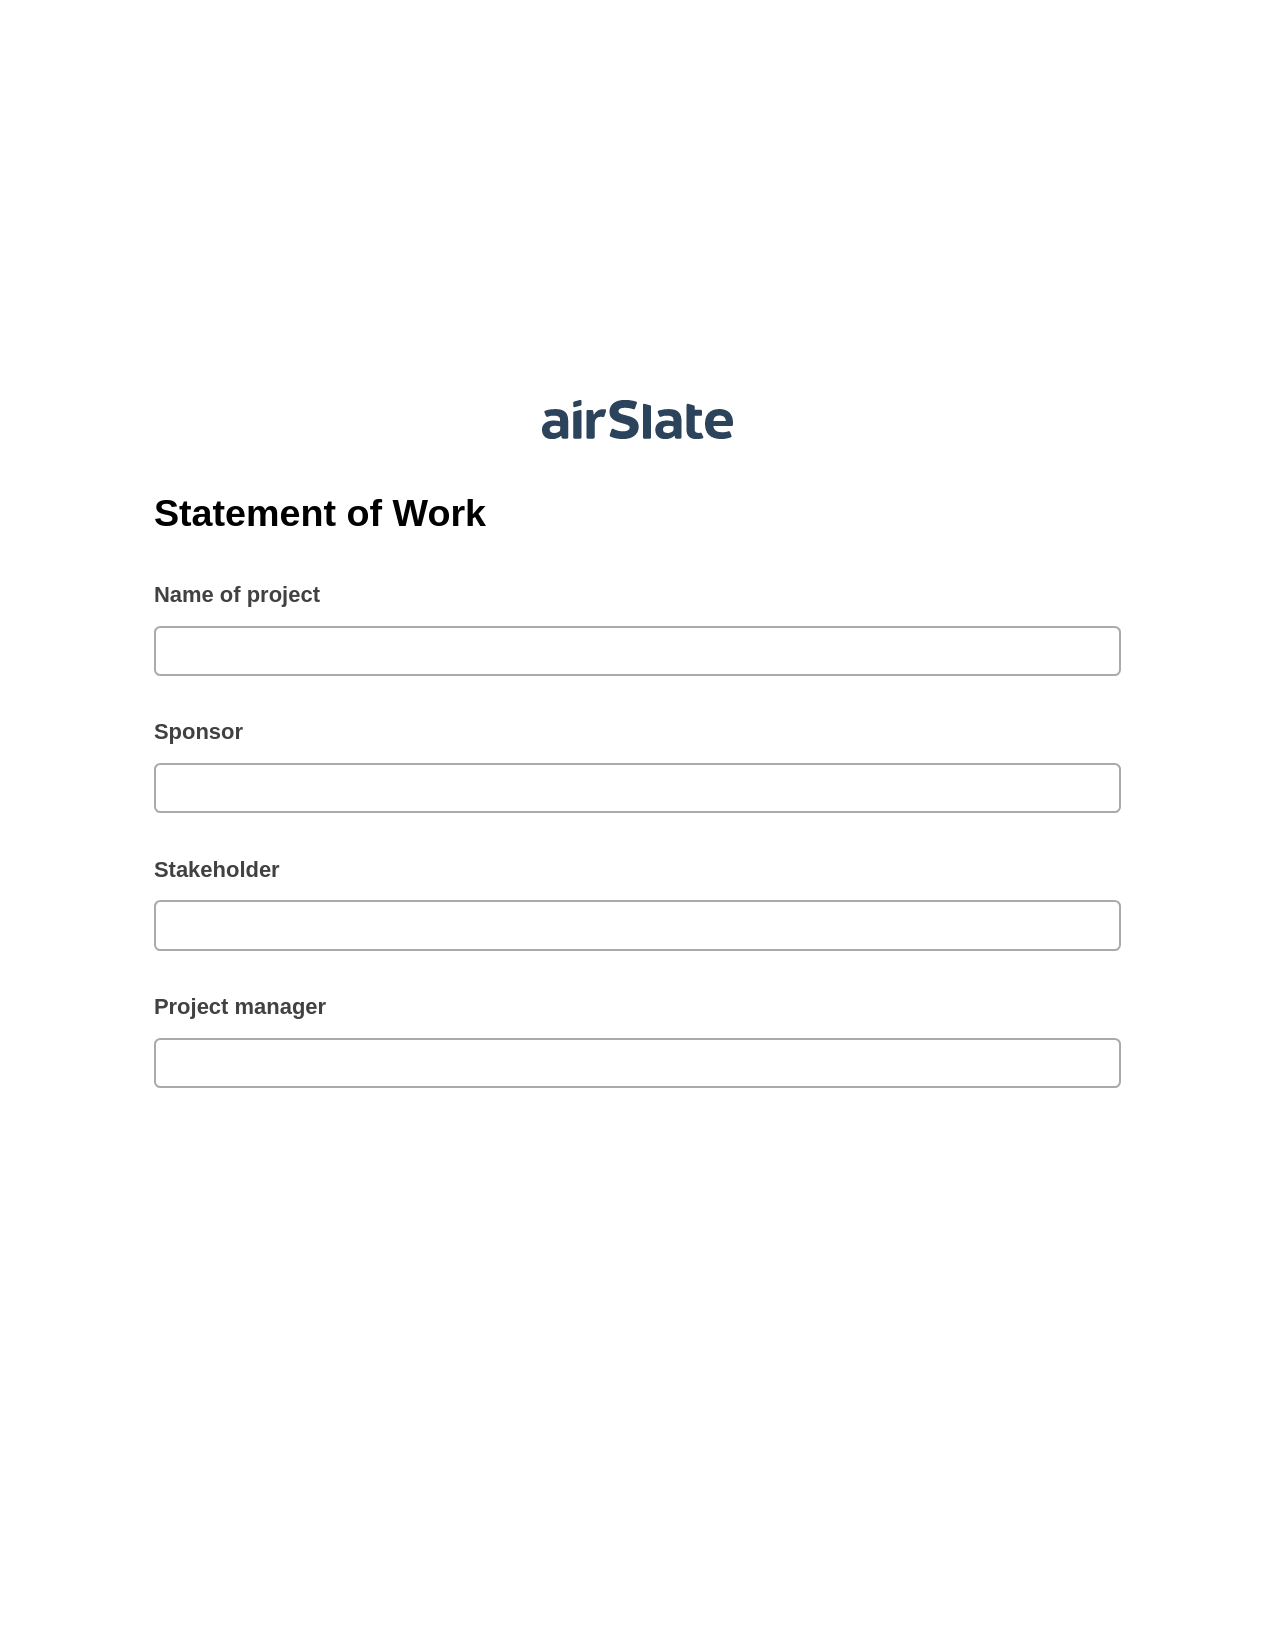 Multirole Statement of Work Pre-fill from Salesforce Record Bot, Slack Notification Bot, Box Bot